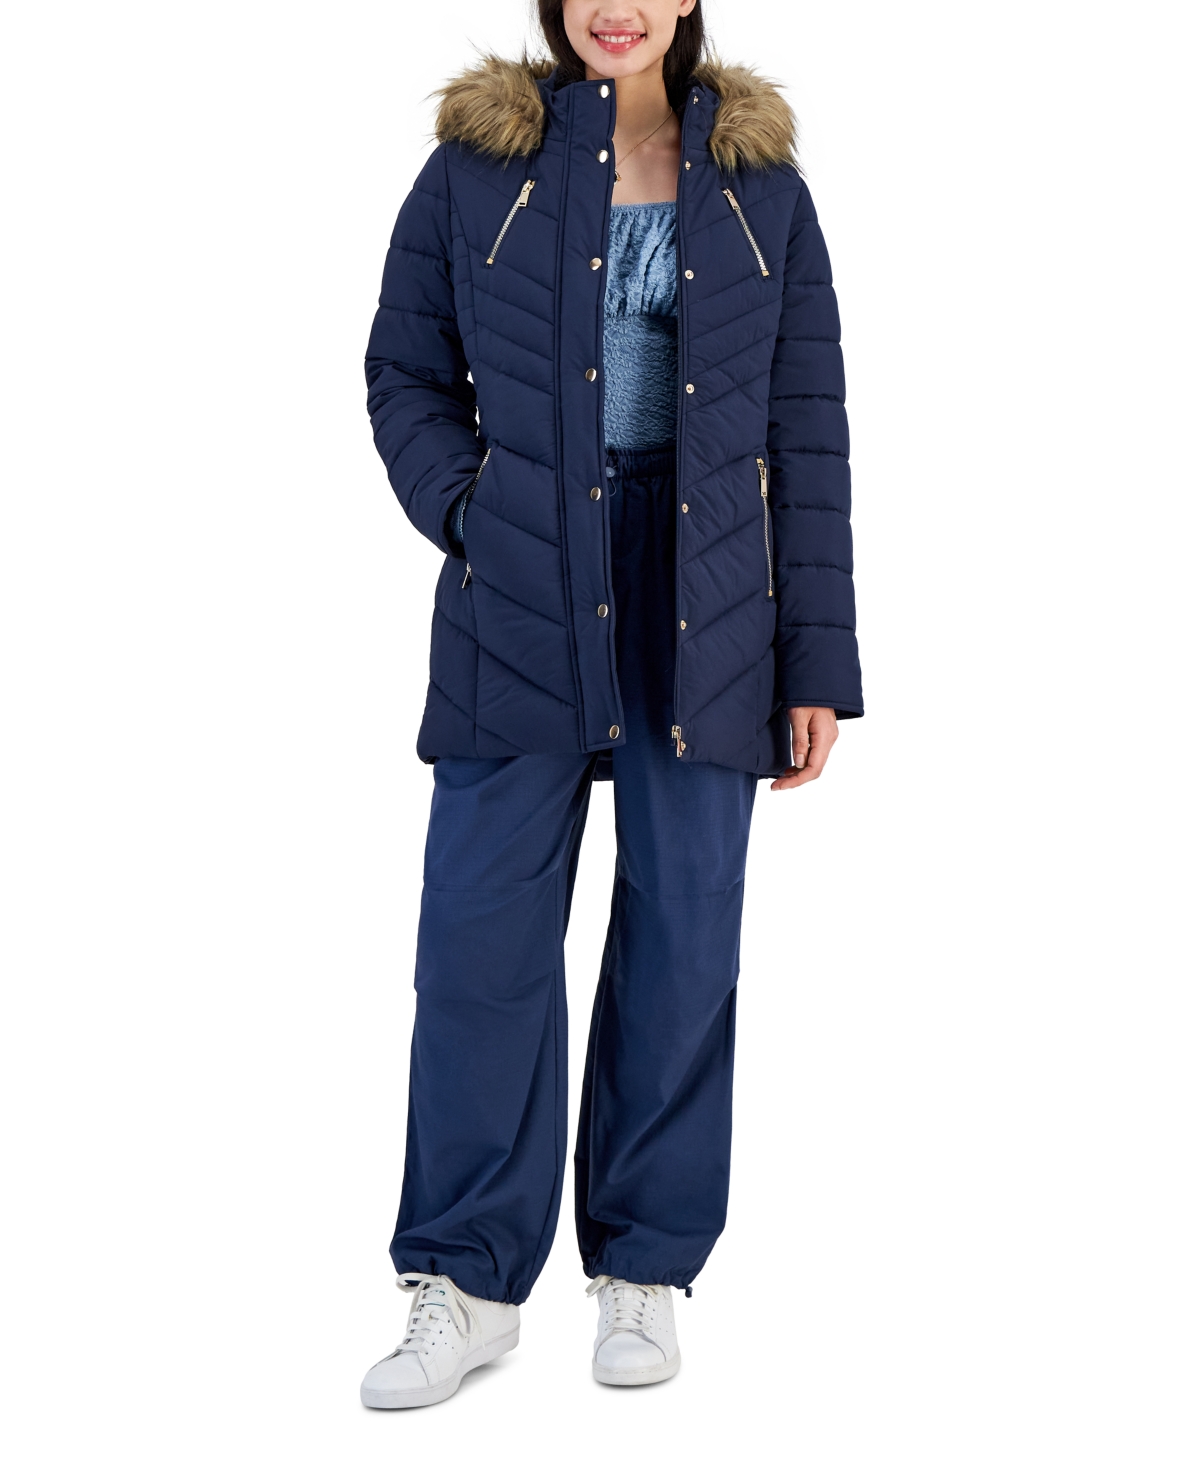 Maralyn & Me Juniors' Faux-Fur-Trim Hooded Puffer Coat, Created for Macy's